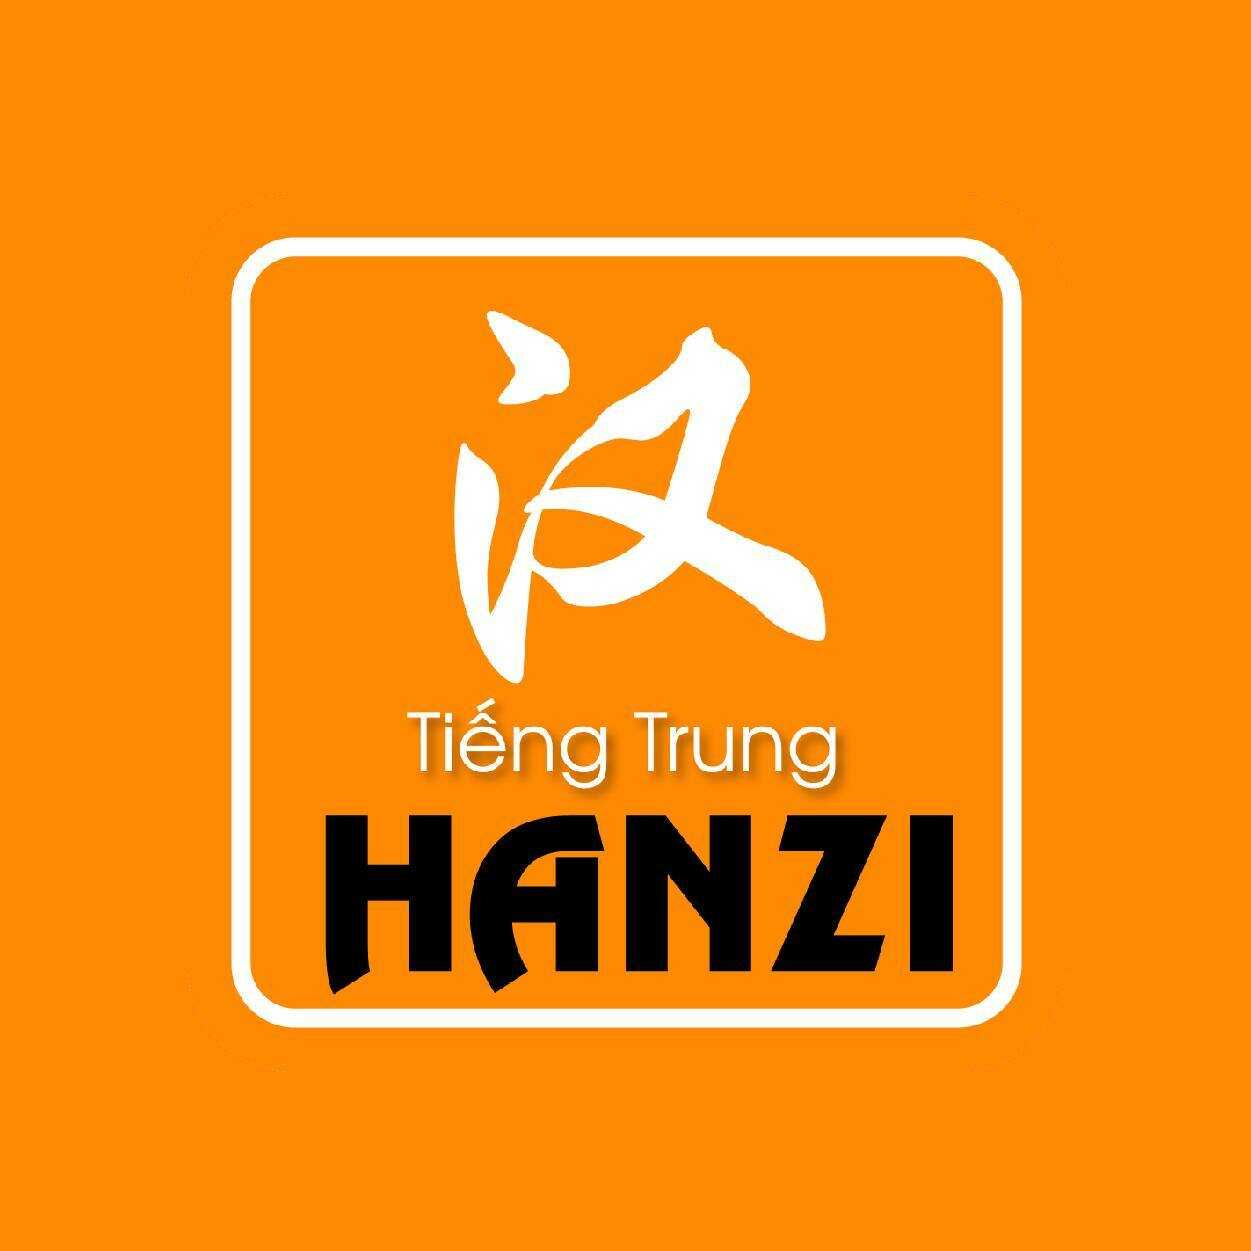 Tiếng Trung  Hanzi (tiengtrunghanzi)